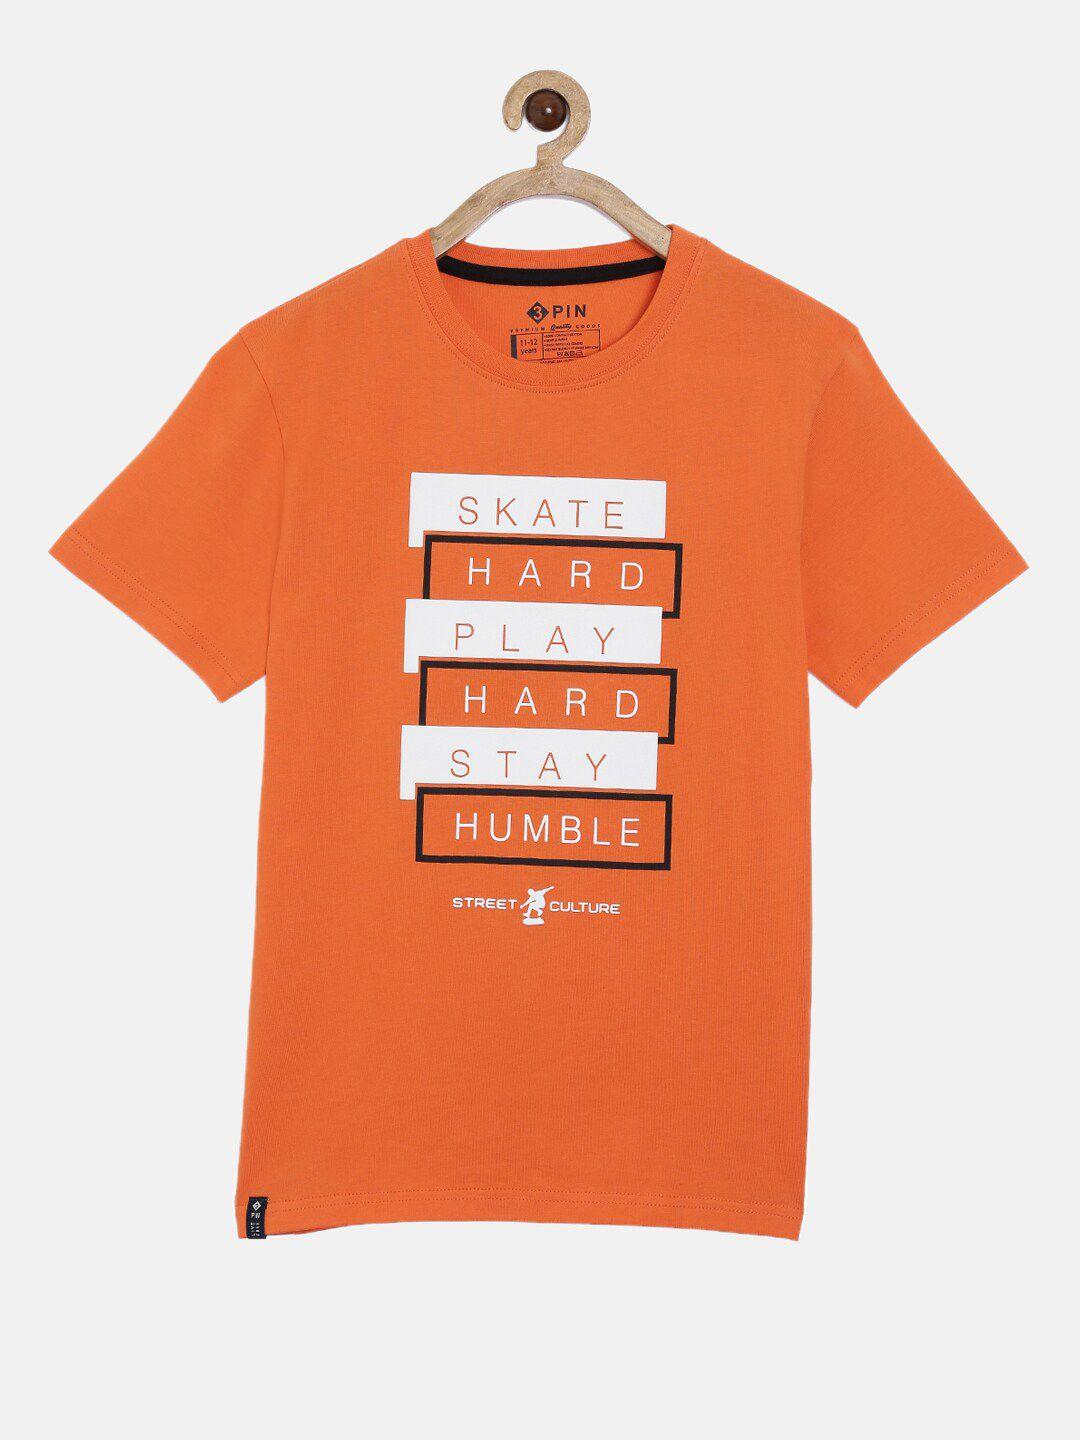 3pin boys orange printed applique t-shirt